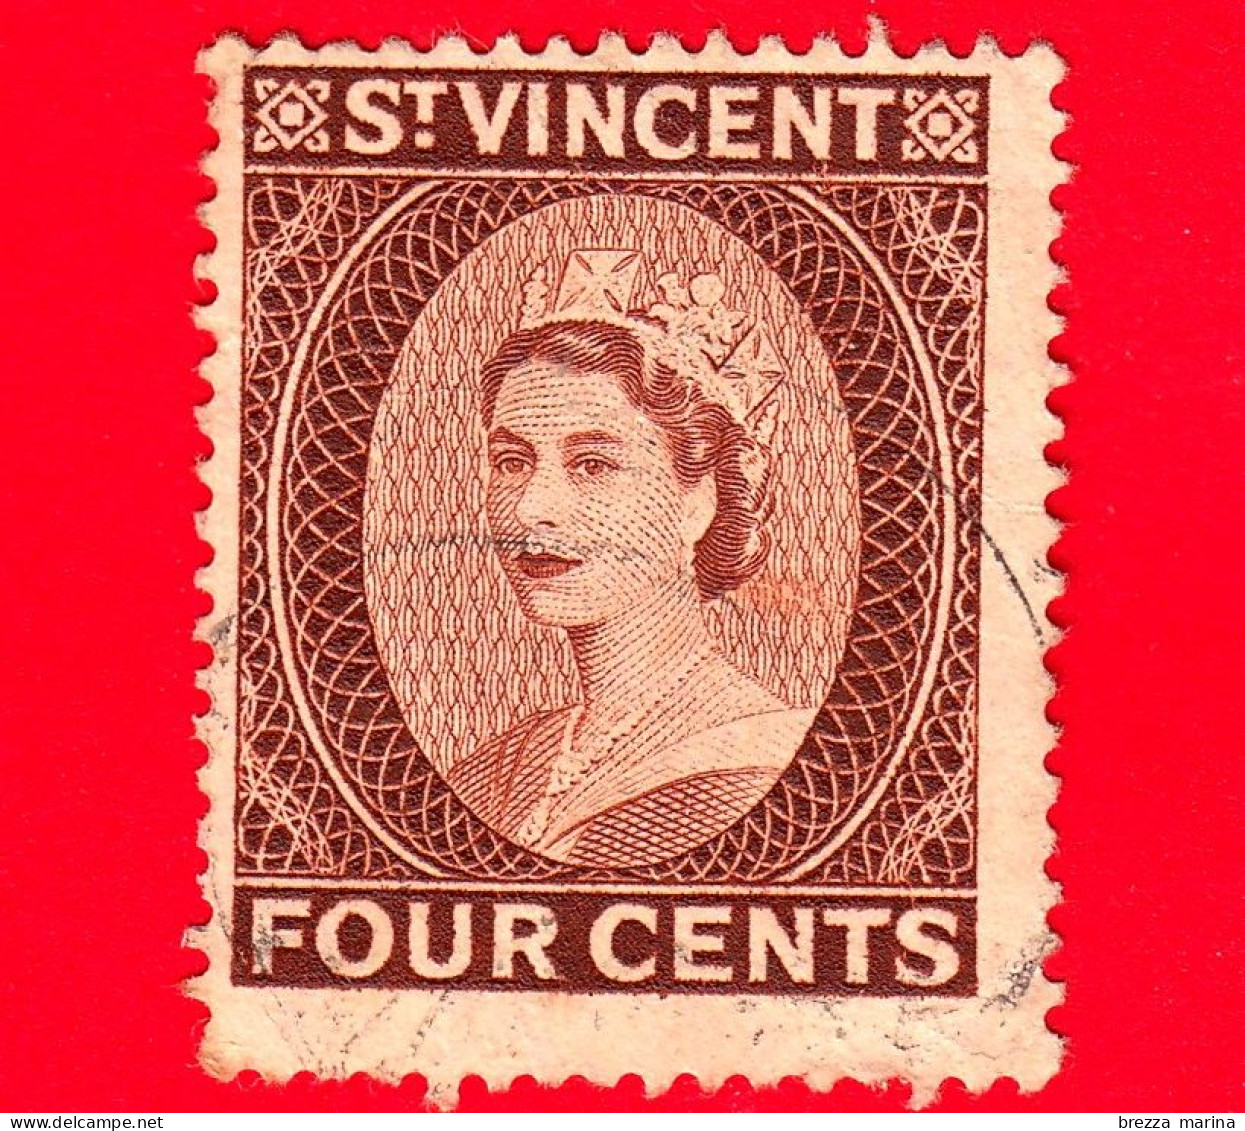 ST. VINCENT- Usato - 1955 - Regina Elisabetta - Queen Elizabeth II - 4 - St.Vincent (...-1979)